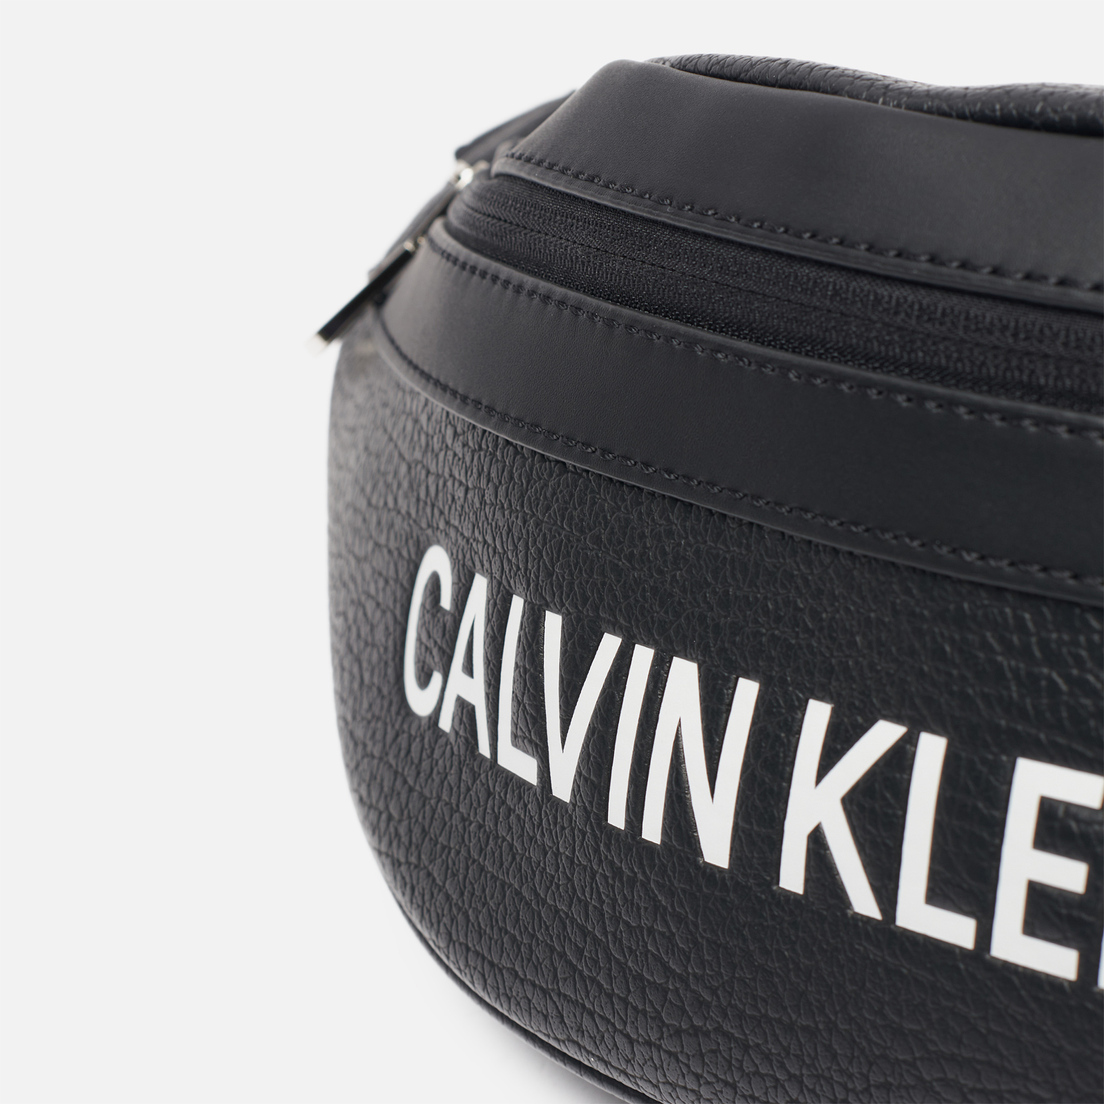 Calvin Klein Jeans Сумка на пояс Bum Logo